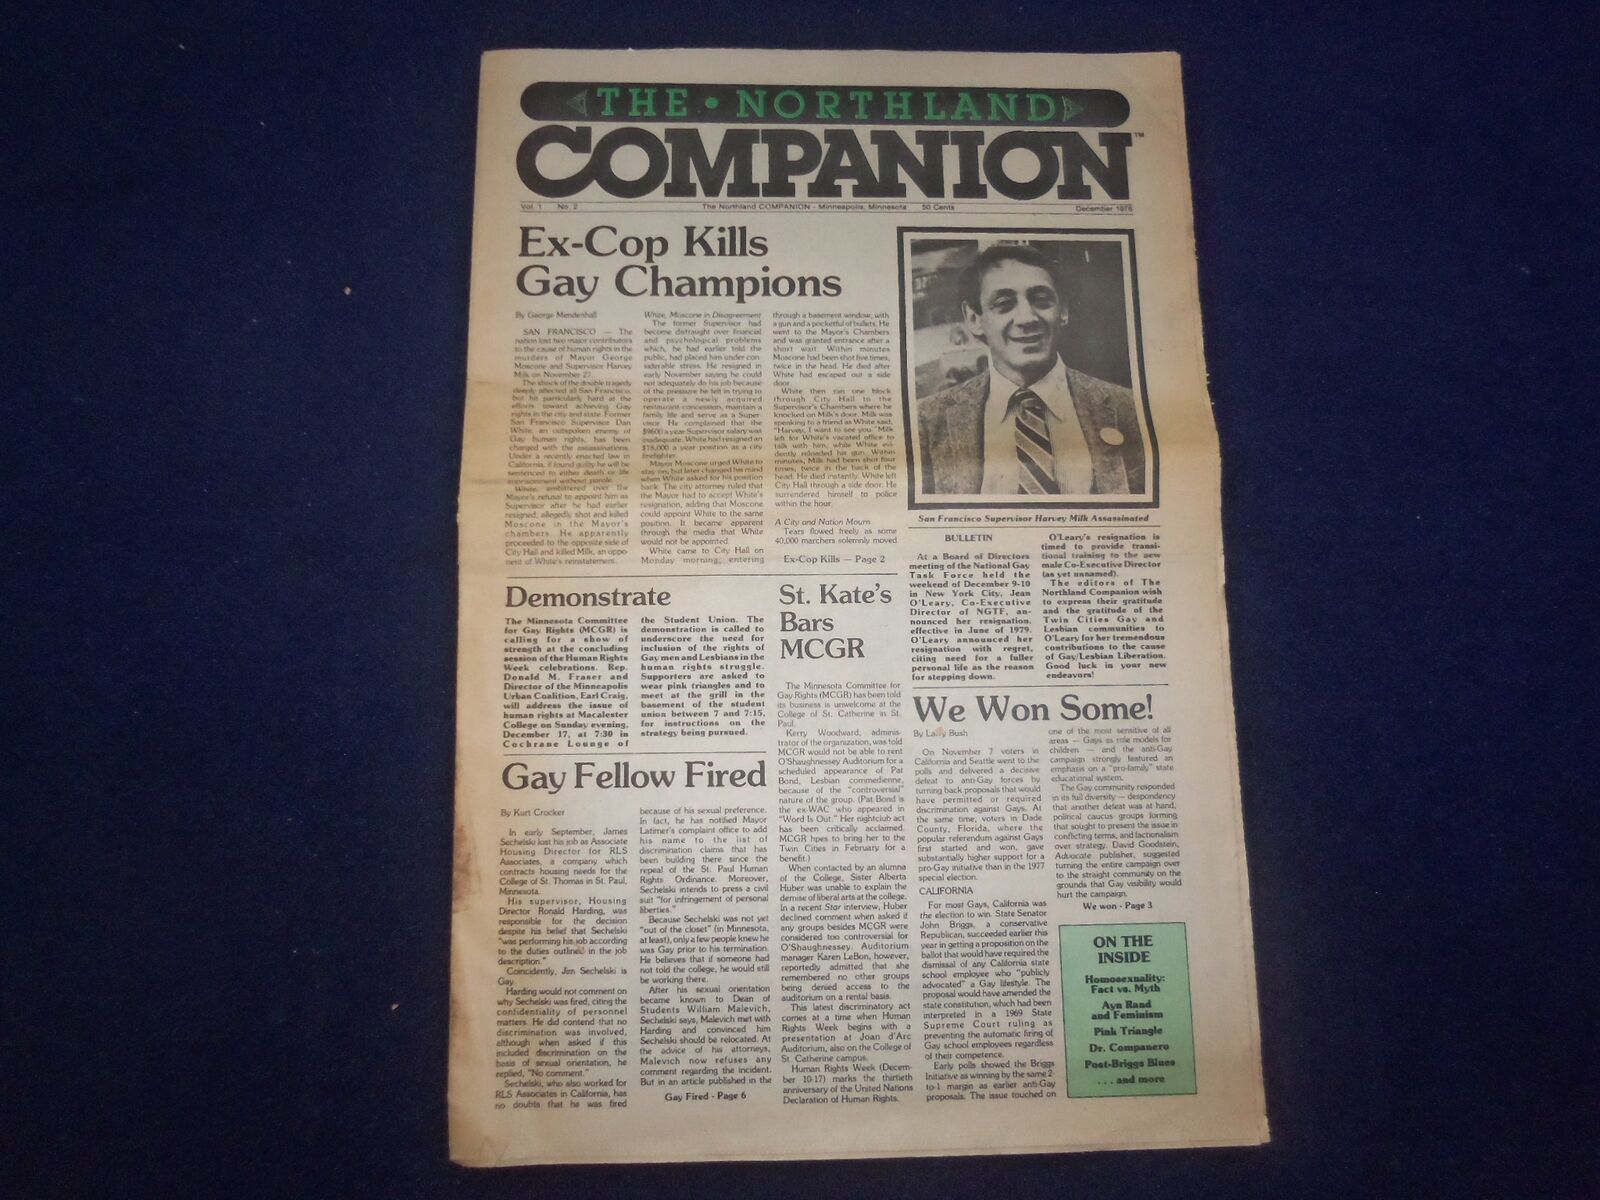 1978 DEC NORTHLAND COMPANION NEWSPAPER - EX-COP KILLS MILK & MOSCONE - NP 6869